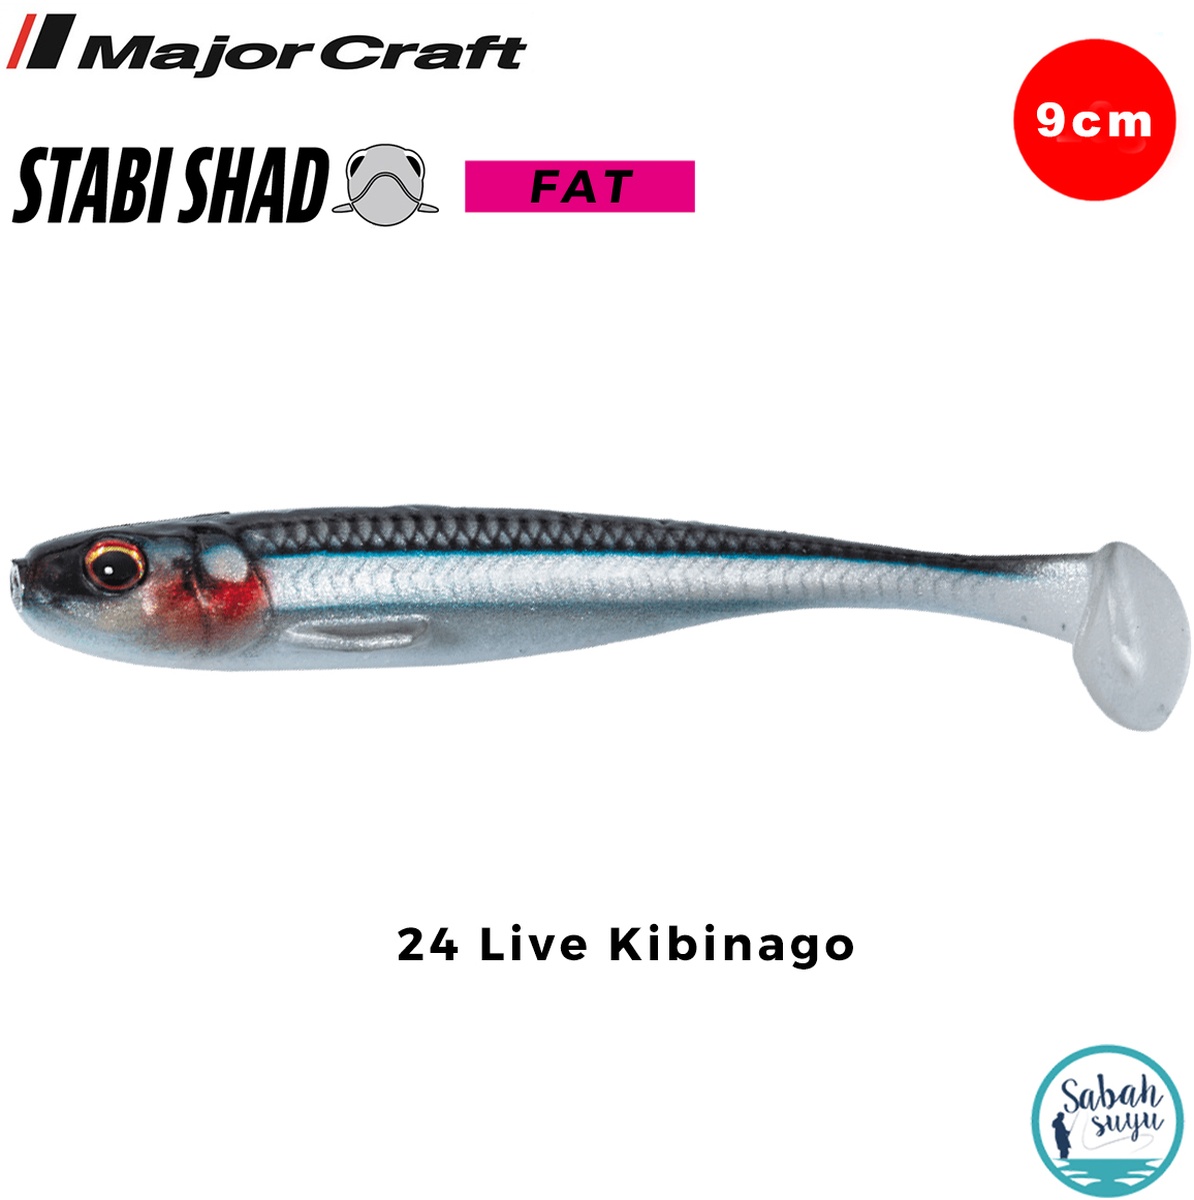 Major Craft Stabi Shad Slim 9cm Silikon Balık #24 Live Kibinago